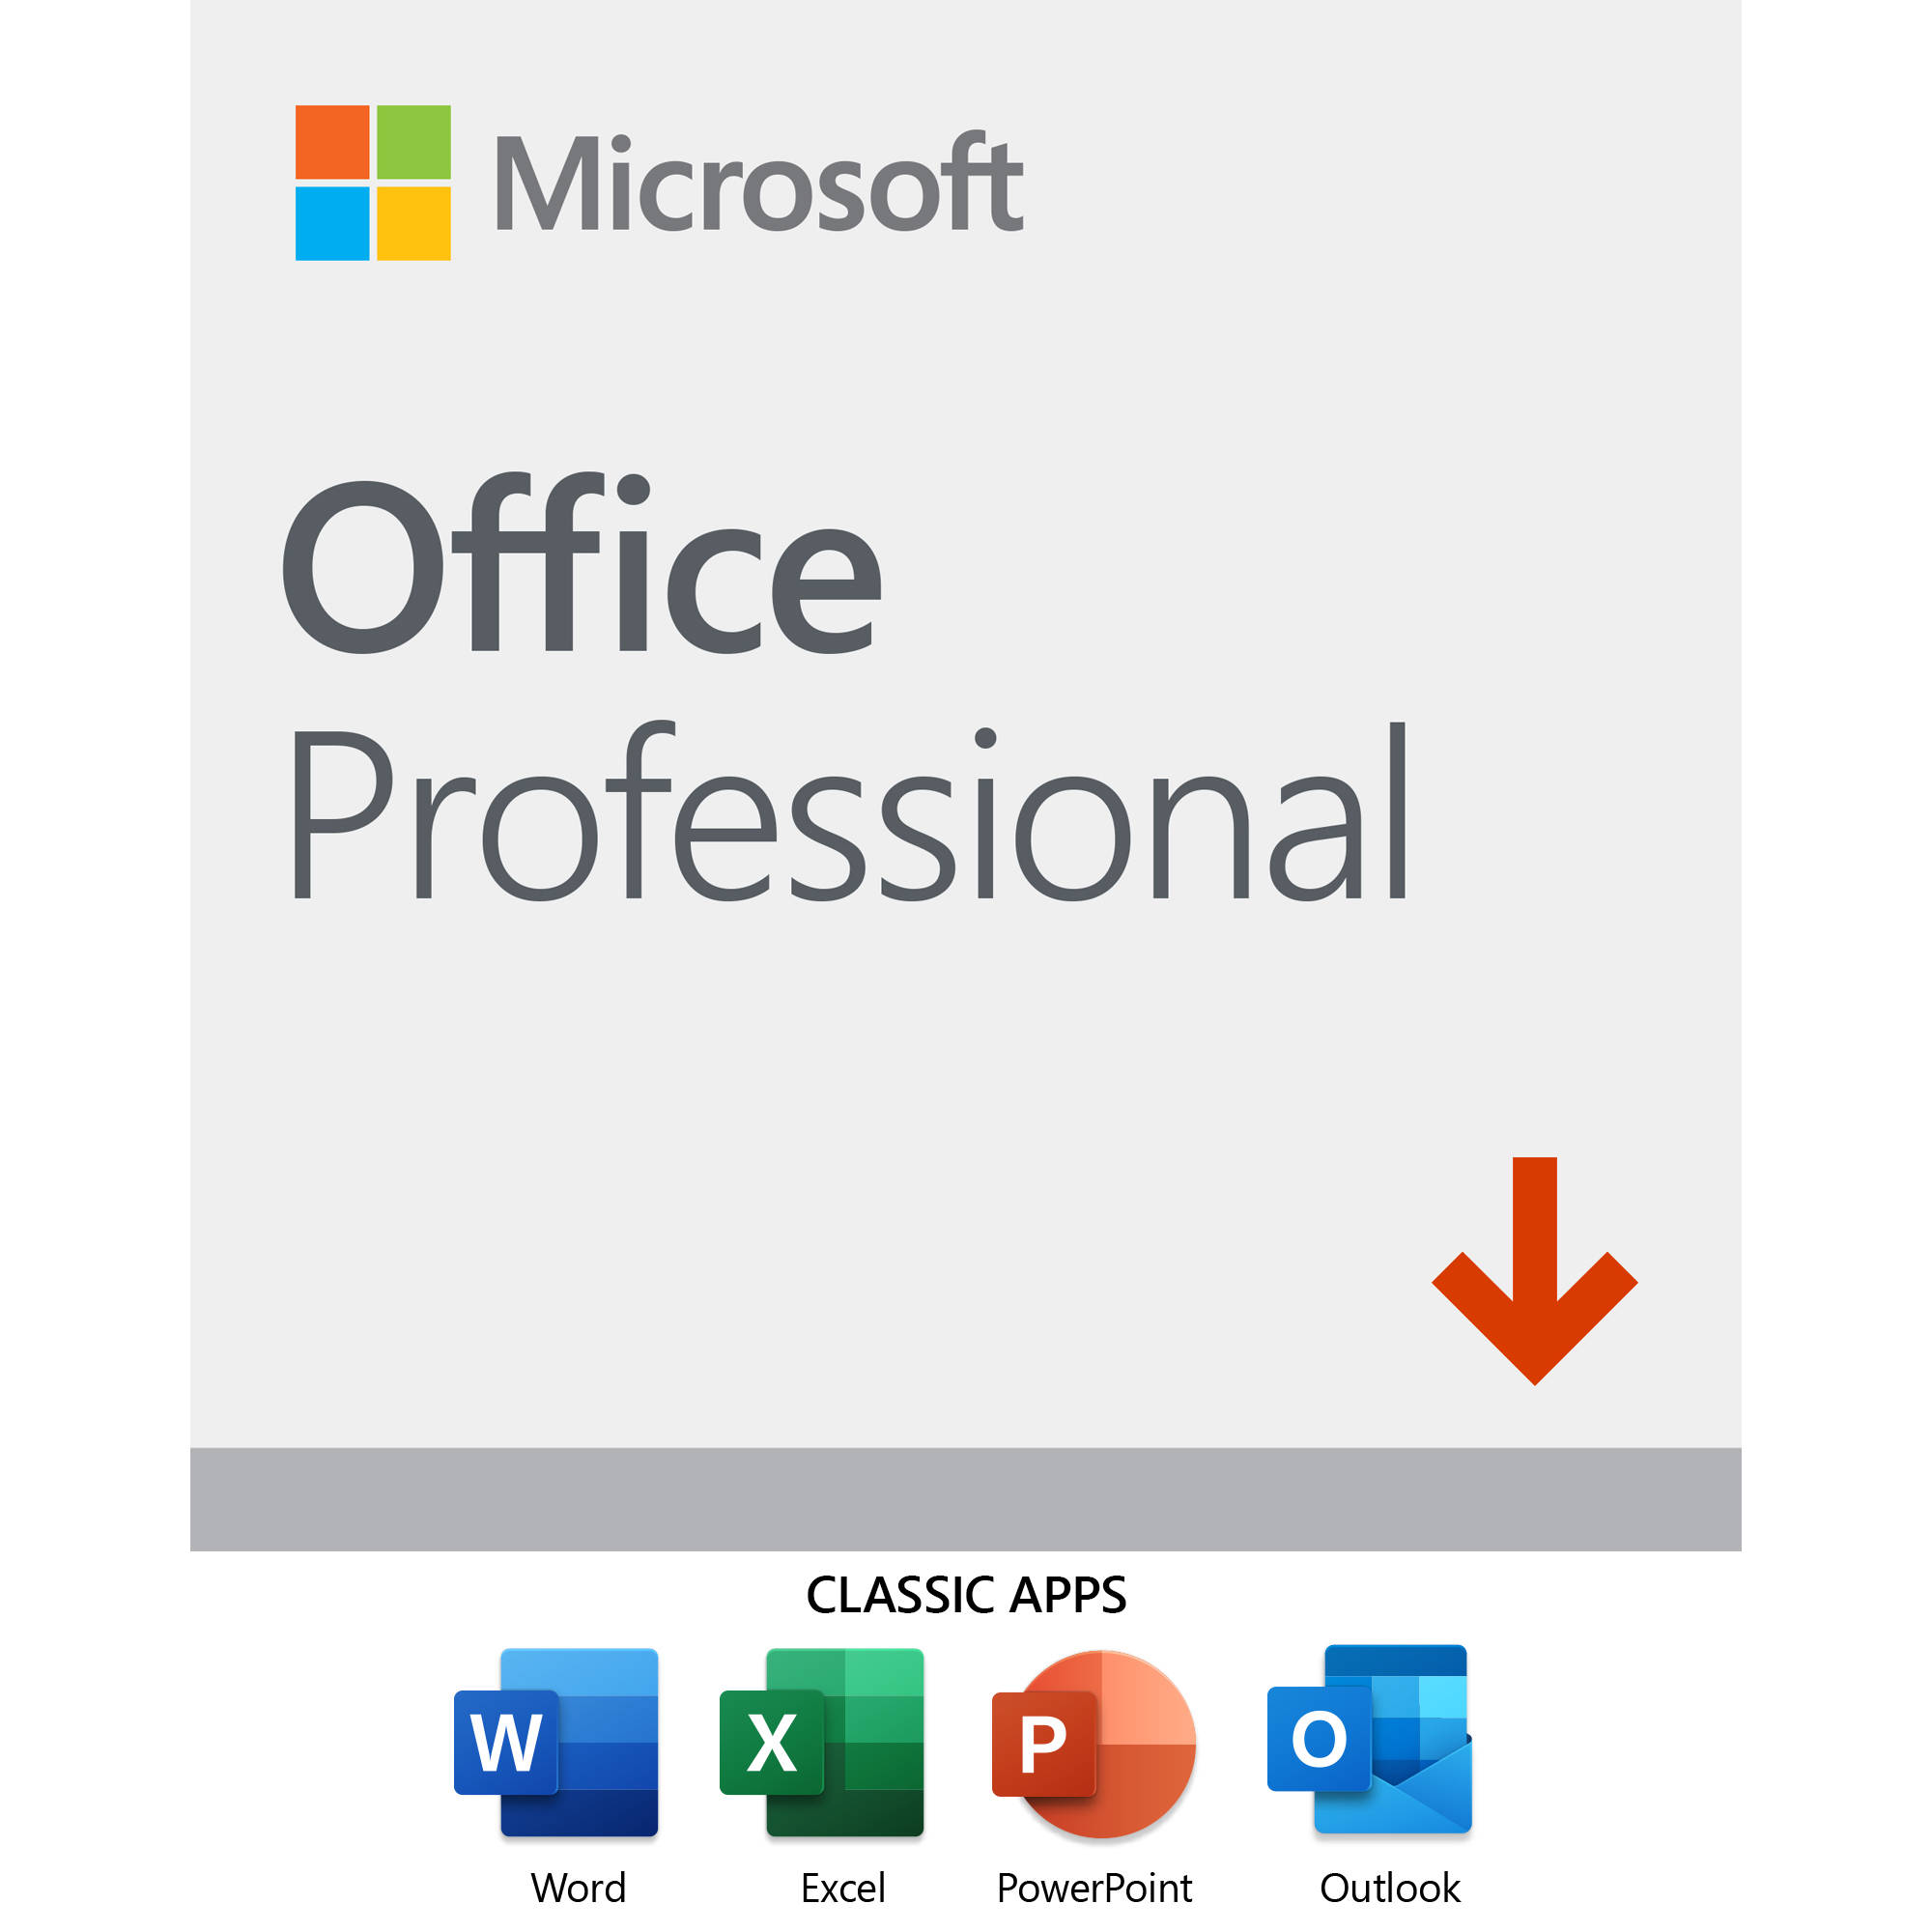 Microsoft Office Professional 2019 269 17076 B H Photo Video